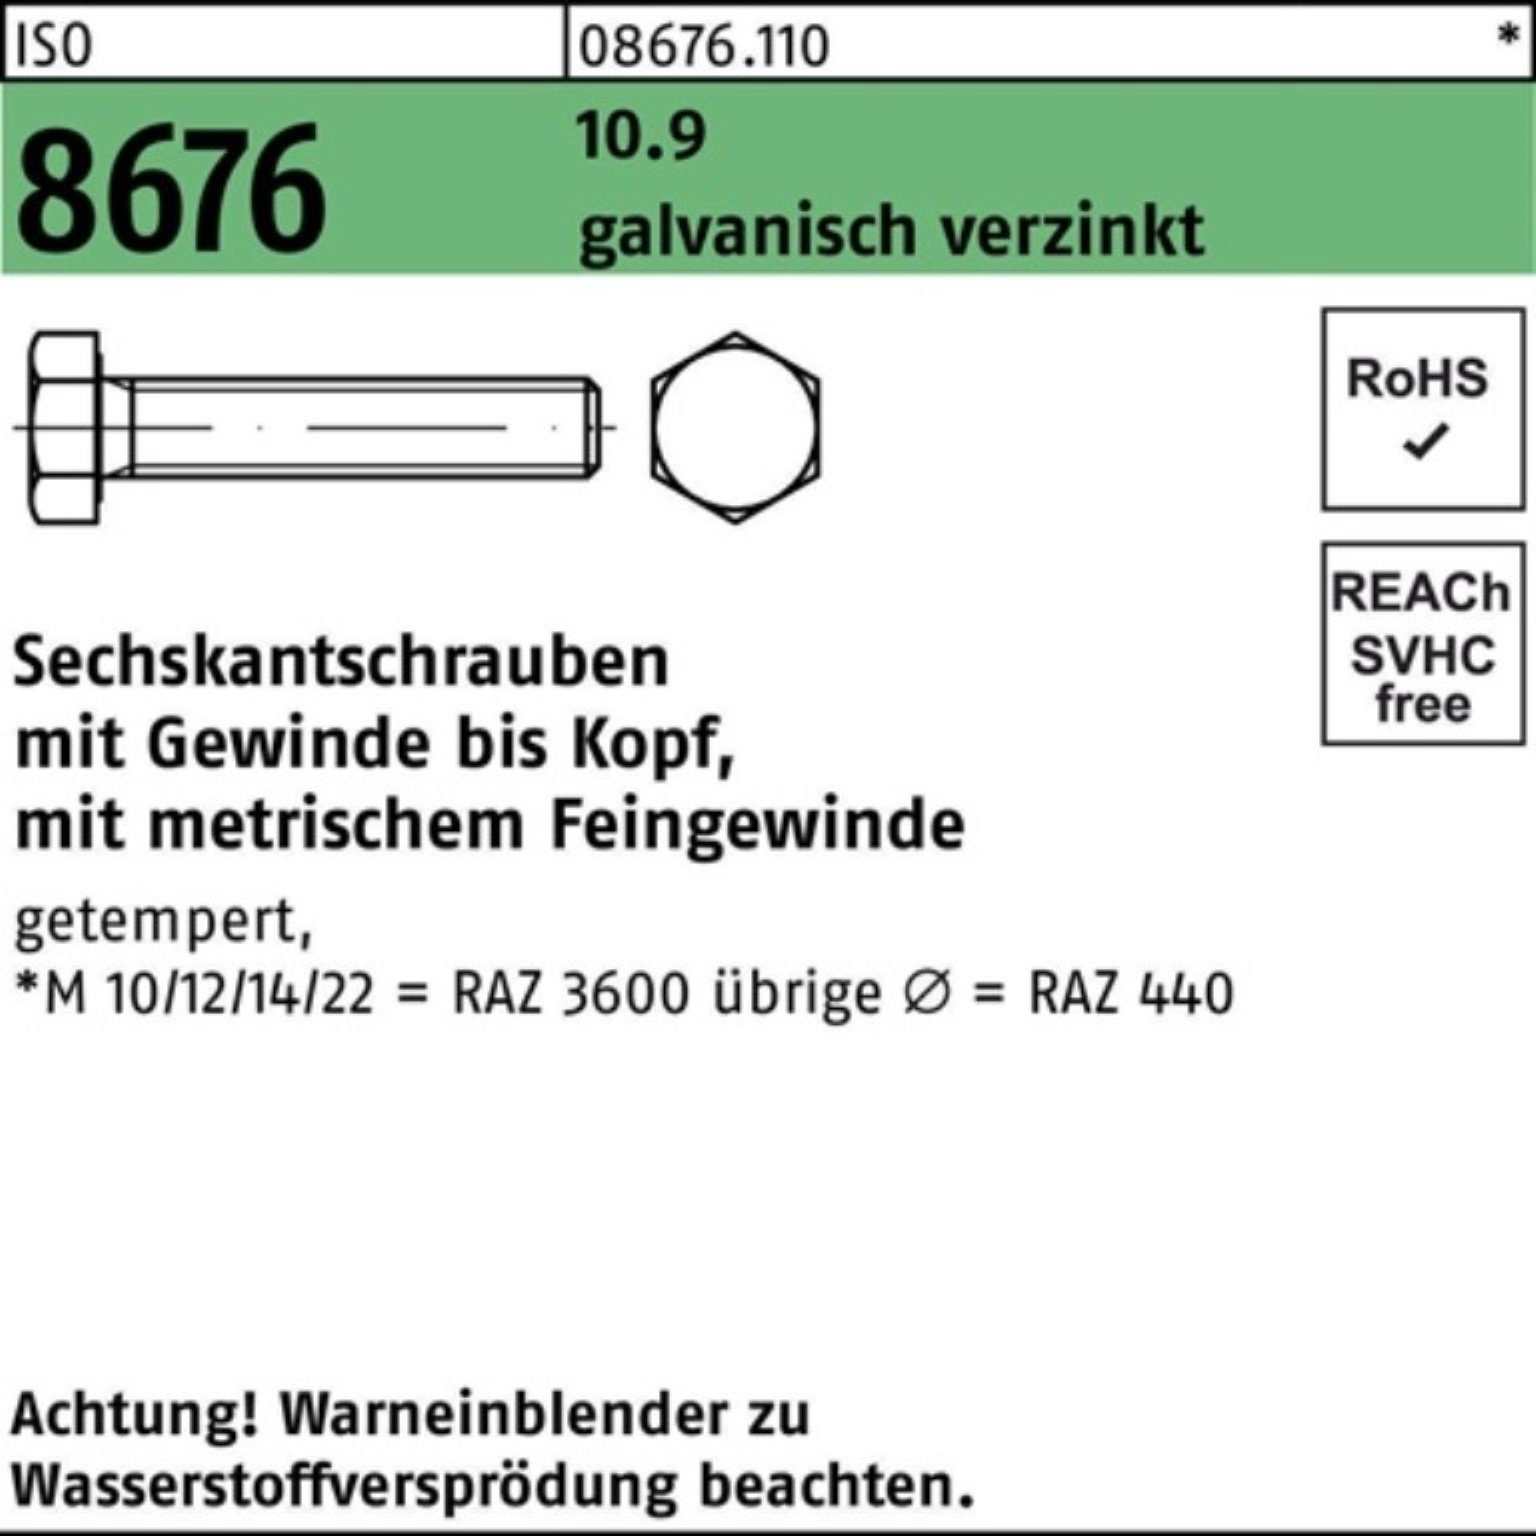 Reyher Sechskantschraube 200er Pack 8676 Sechskantschraube ISO galv.verz. 10.9 VG 200 20 M10x1x